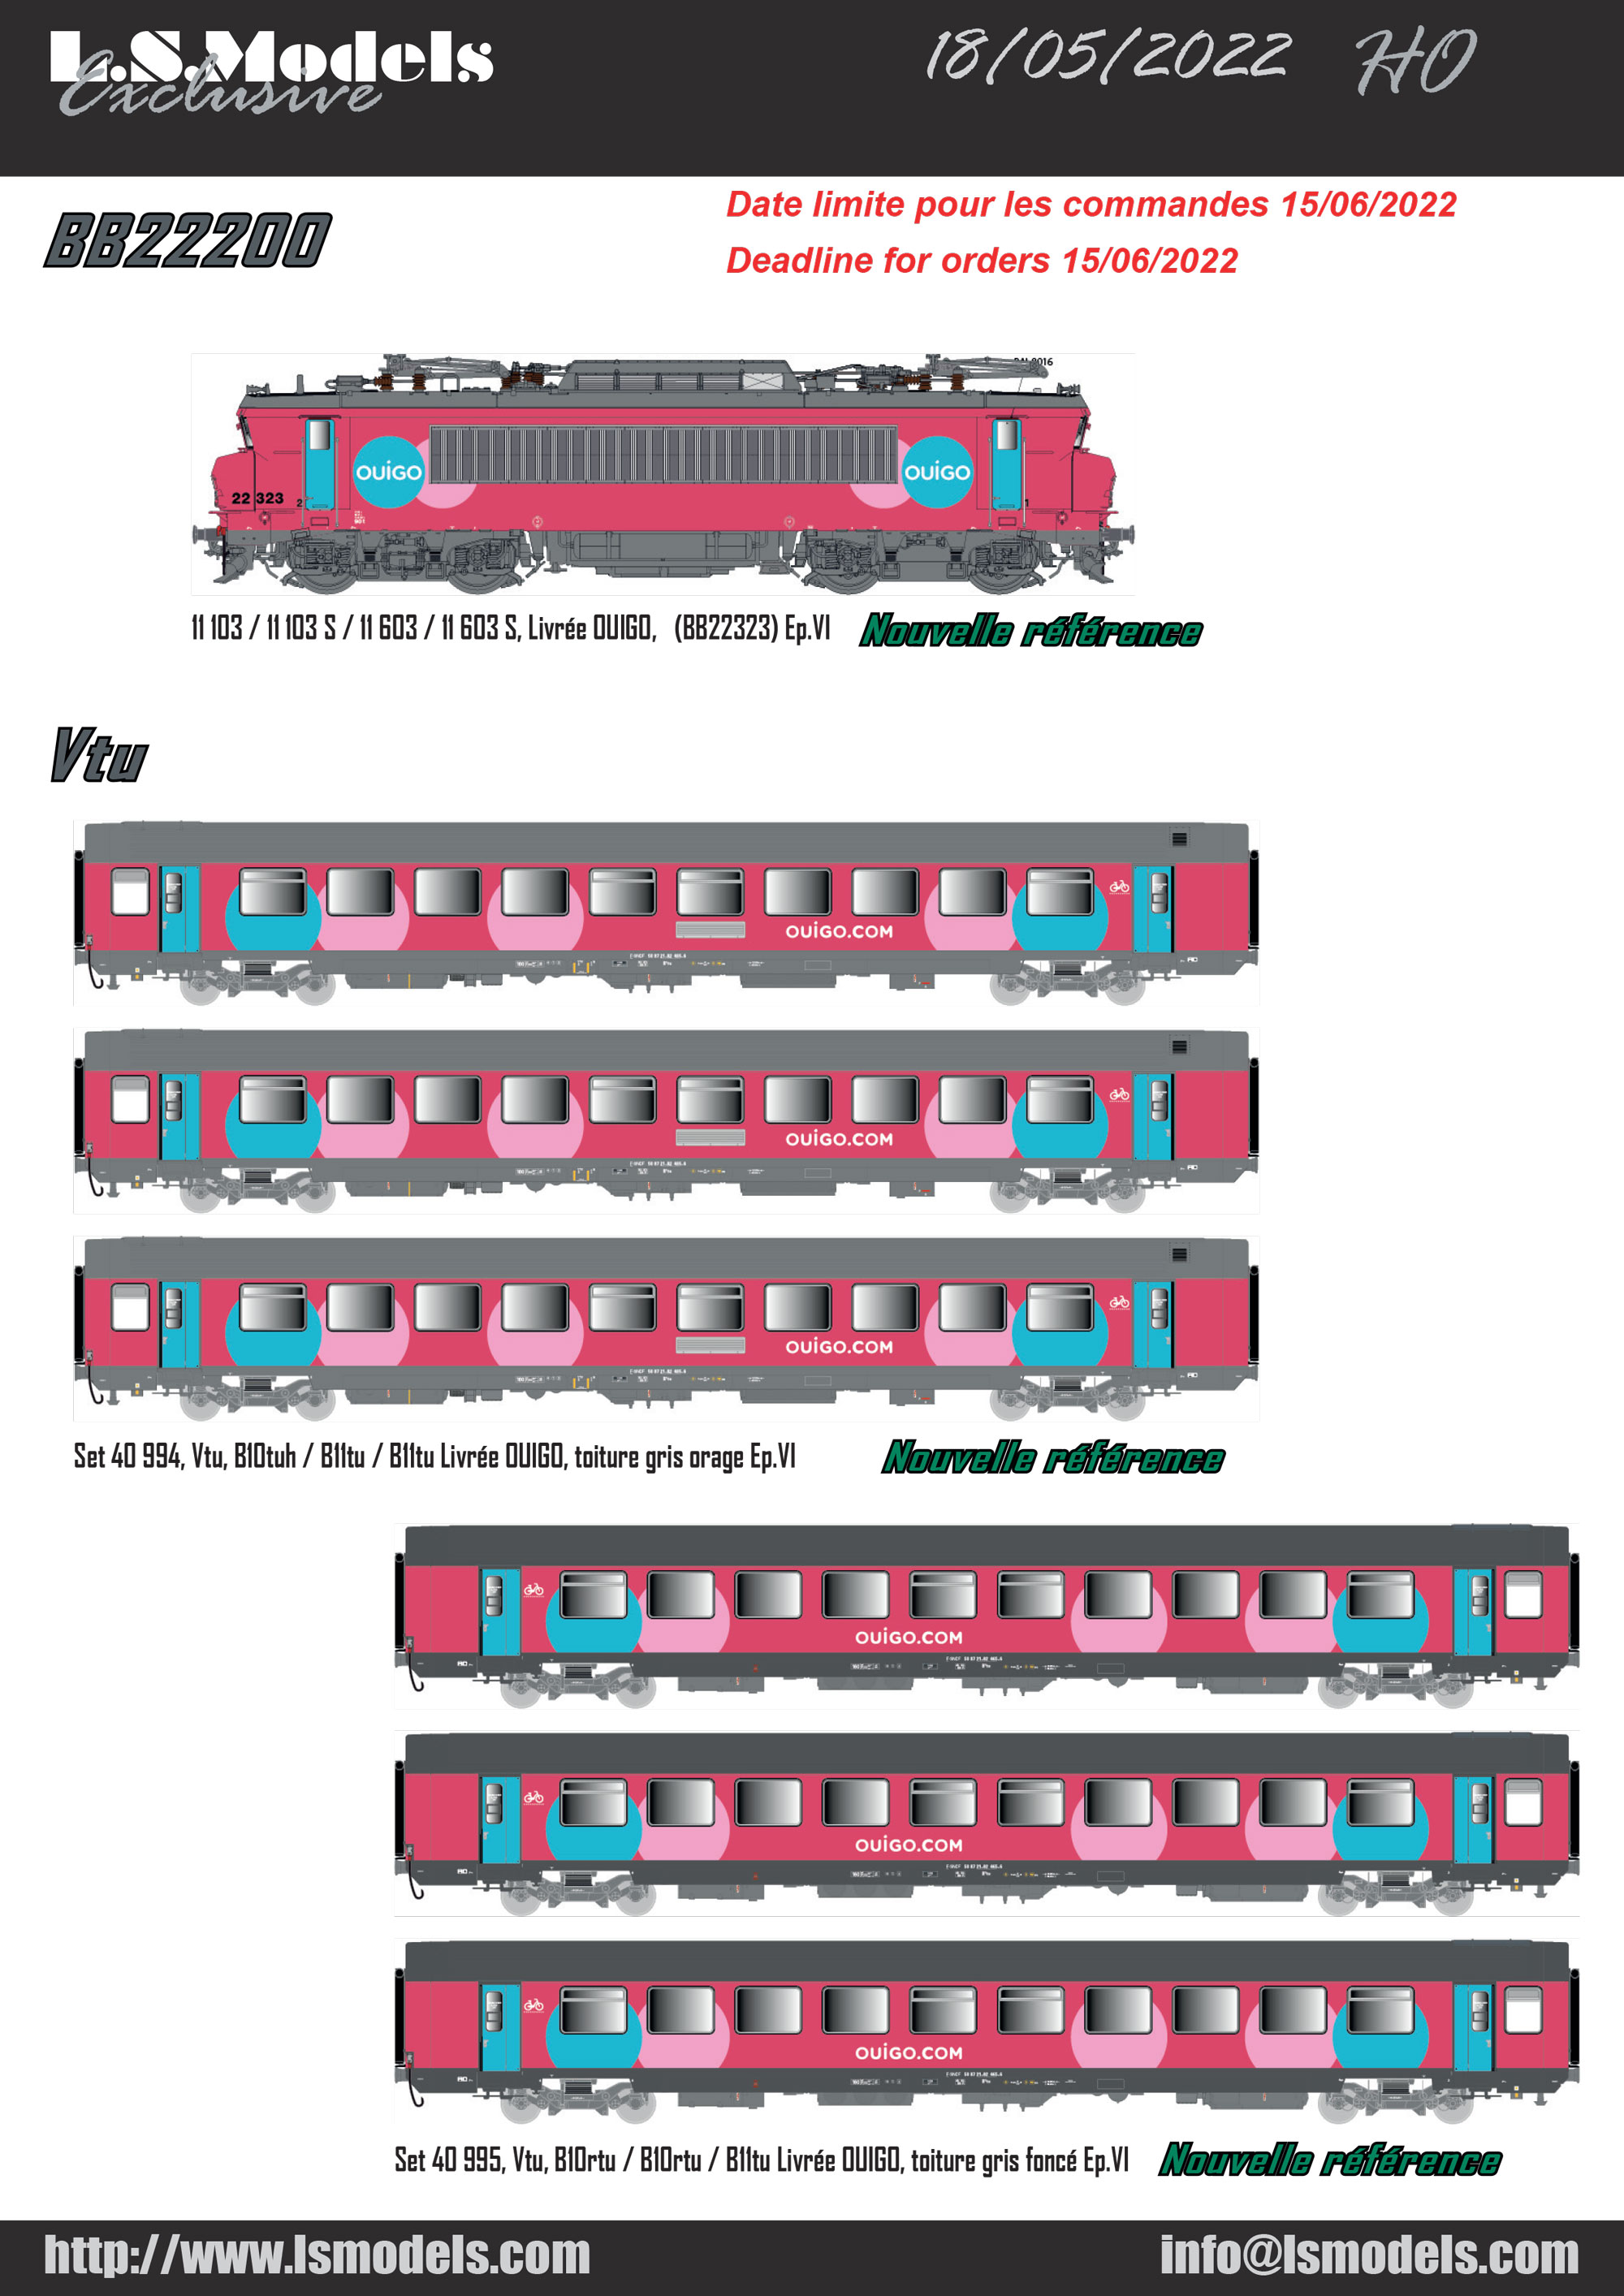 LS Models - SNCF OUIGO - BB22200 electric locomotive & Vtu passenger coaches